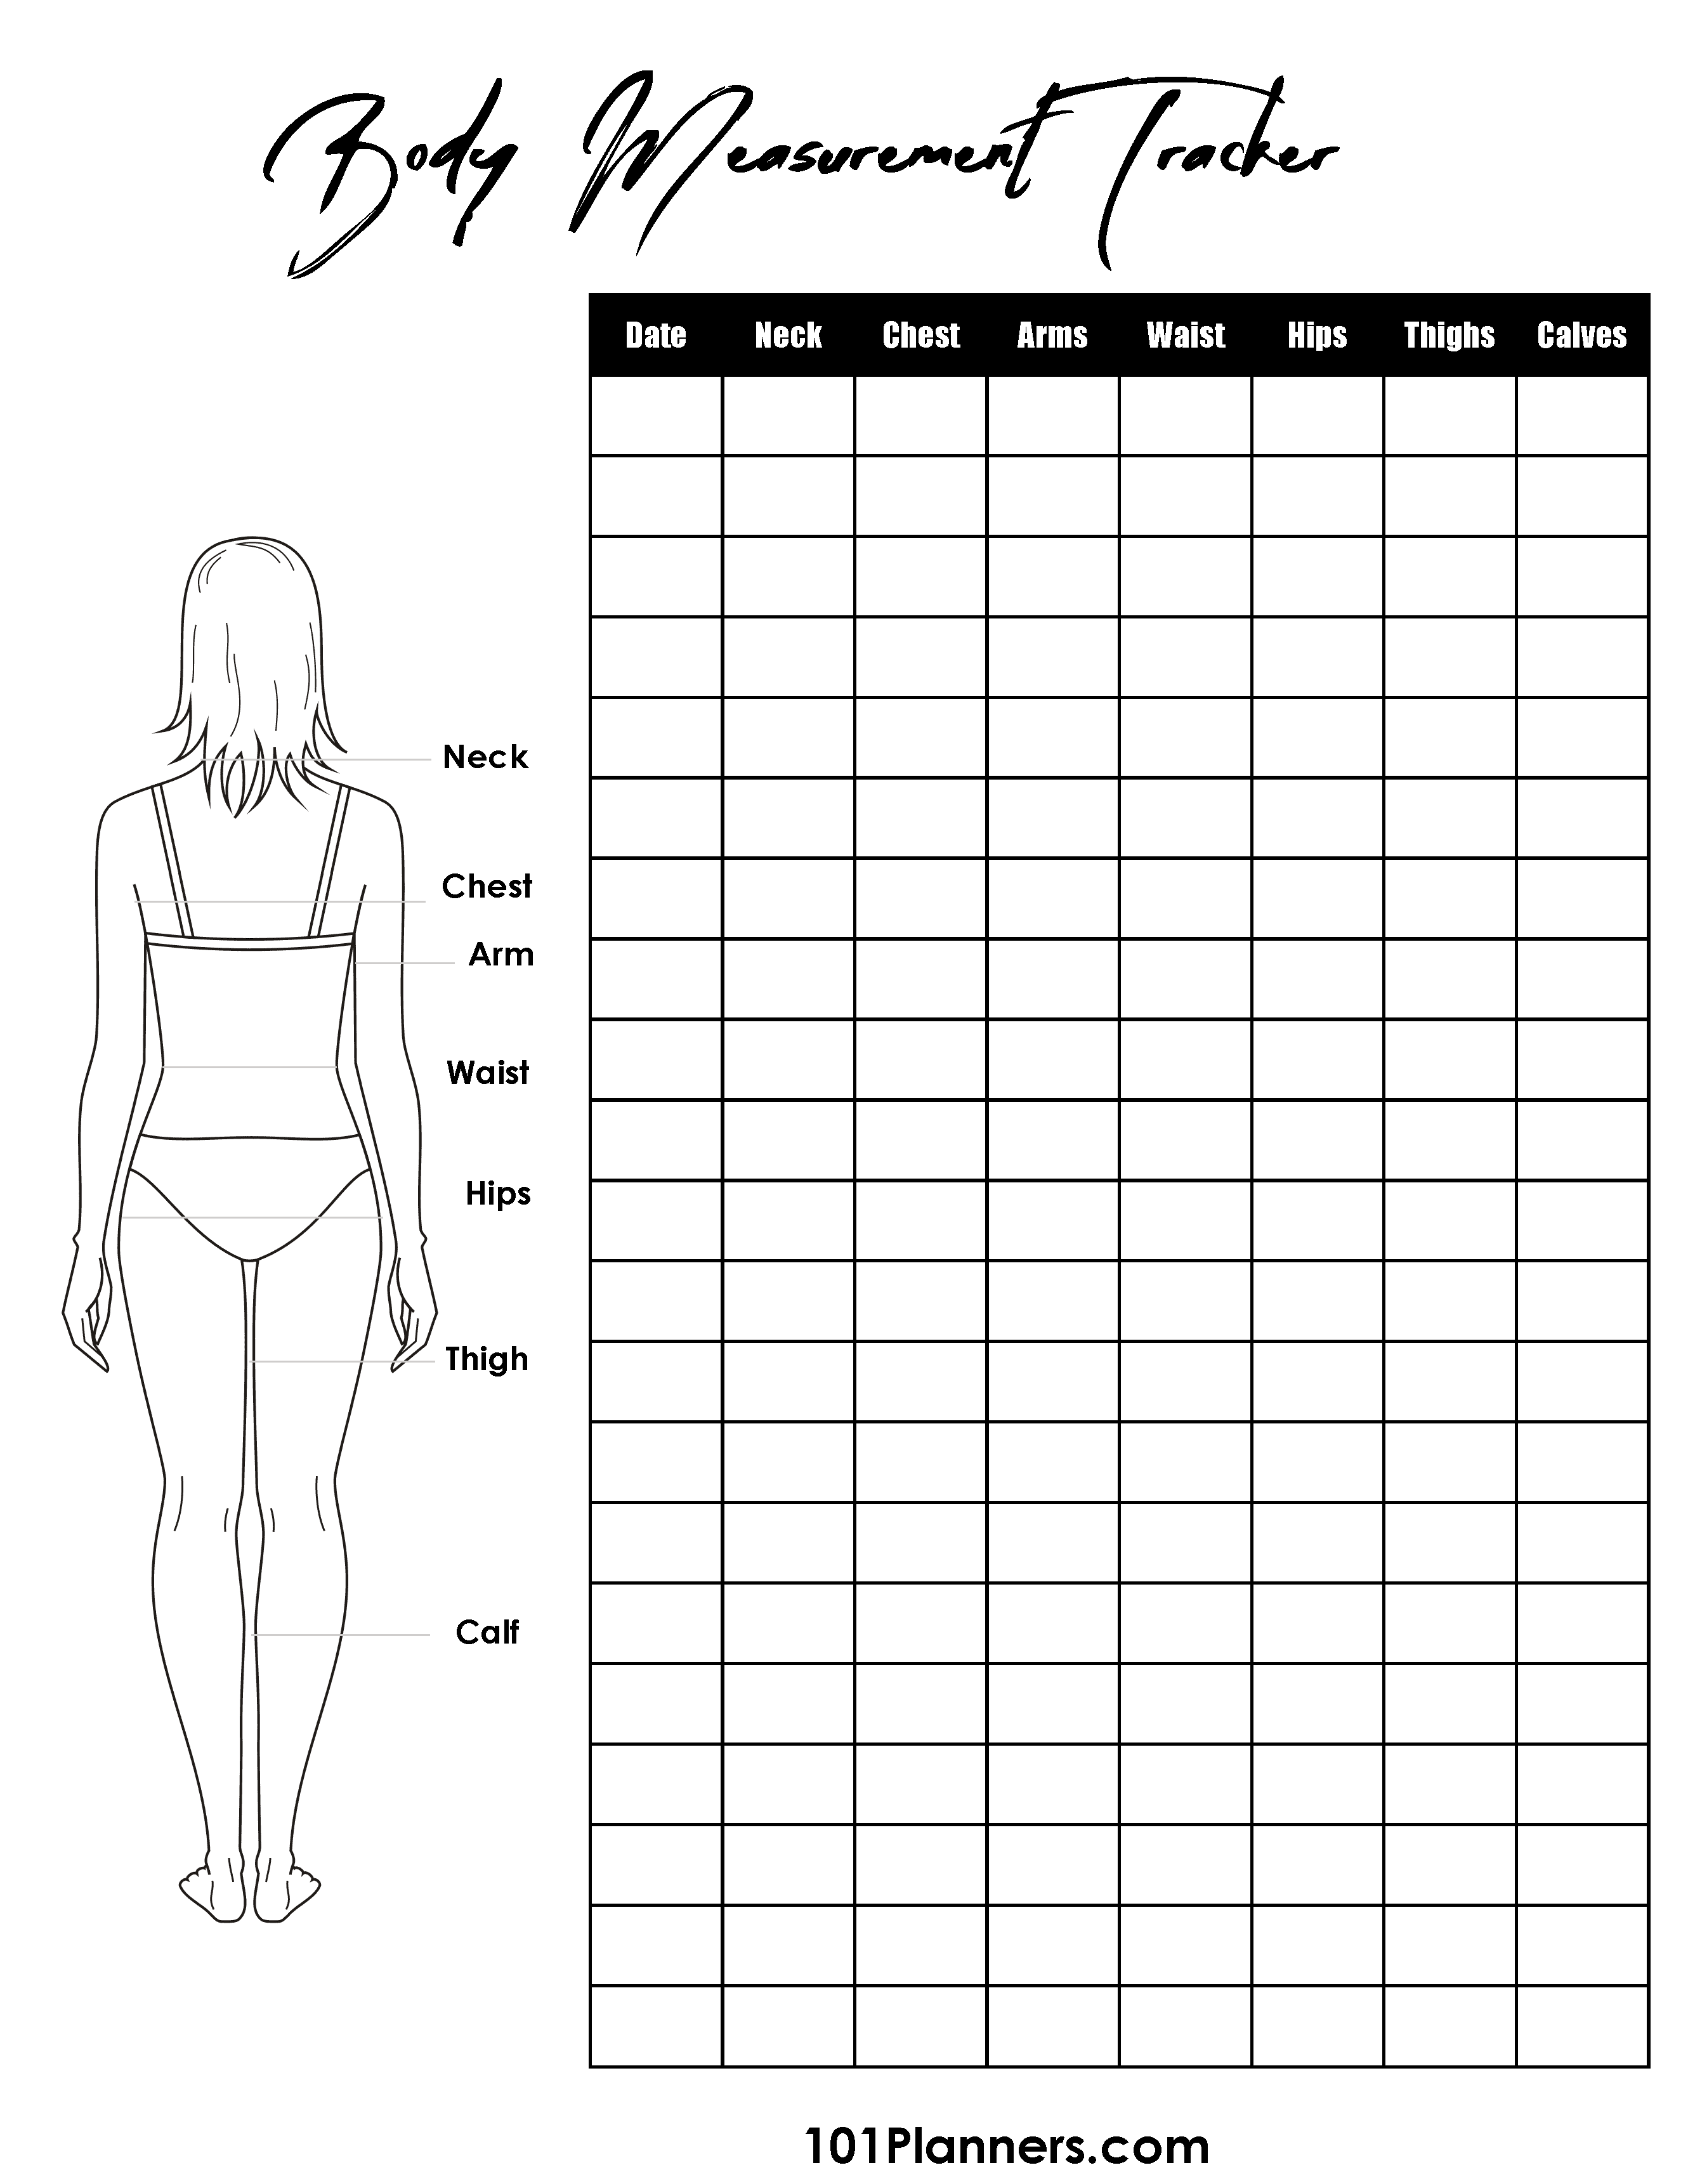 Body Size Chart Printable Digital Women Body Measurement Template, Sewing  Size Chart, Body Measurements Tracker,fillable Fashion Measurement 